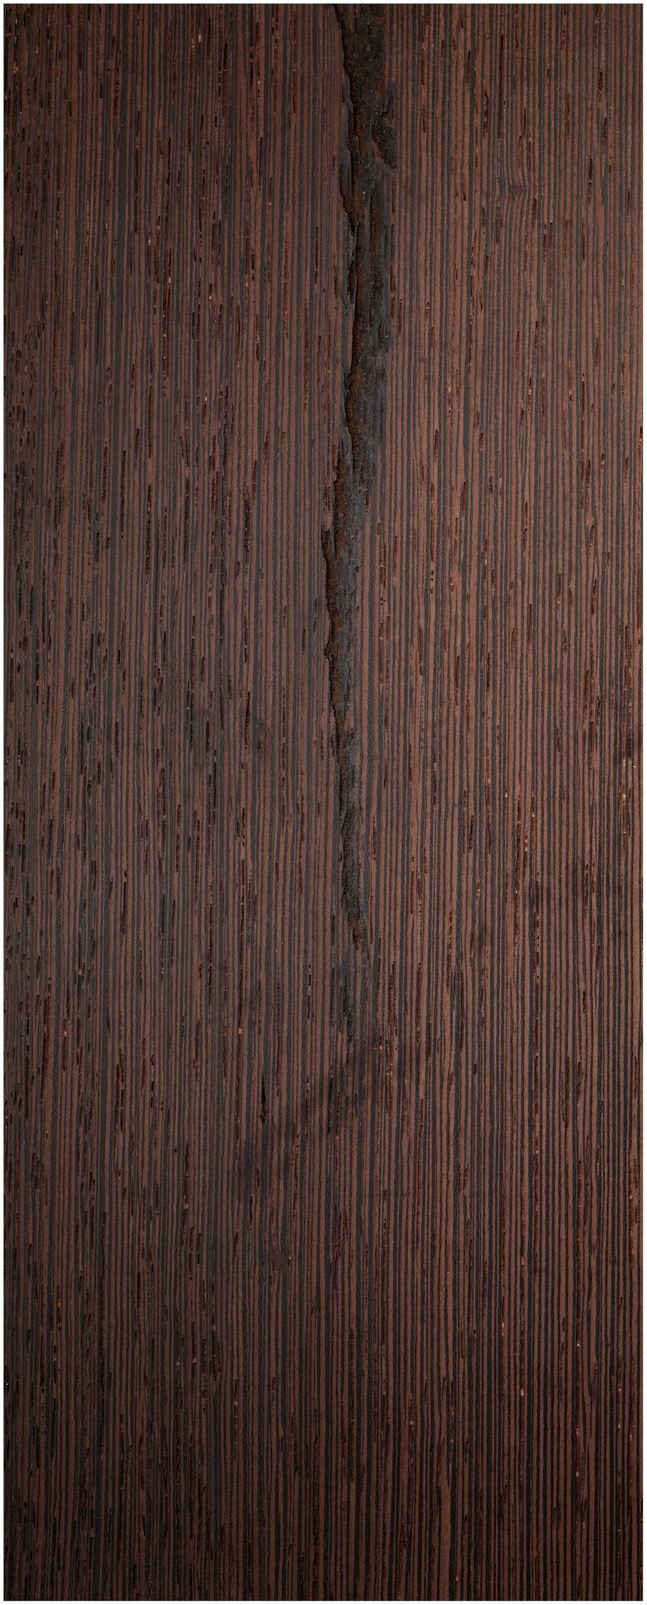 Wallario Poster, Holz-Optik Textur dunkelbraunes Holz, in verschiedenen Ausführungen